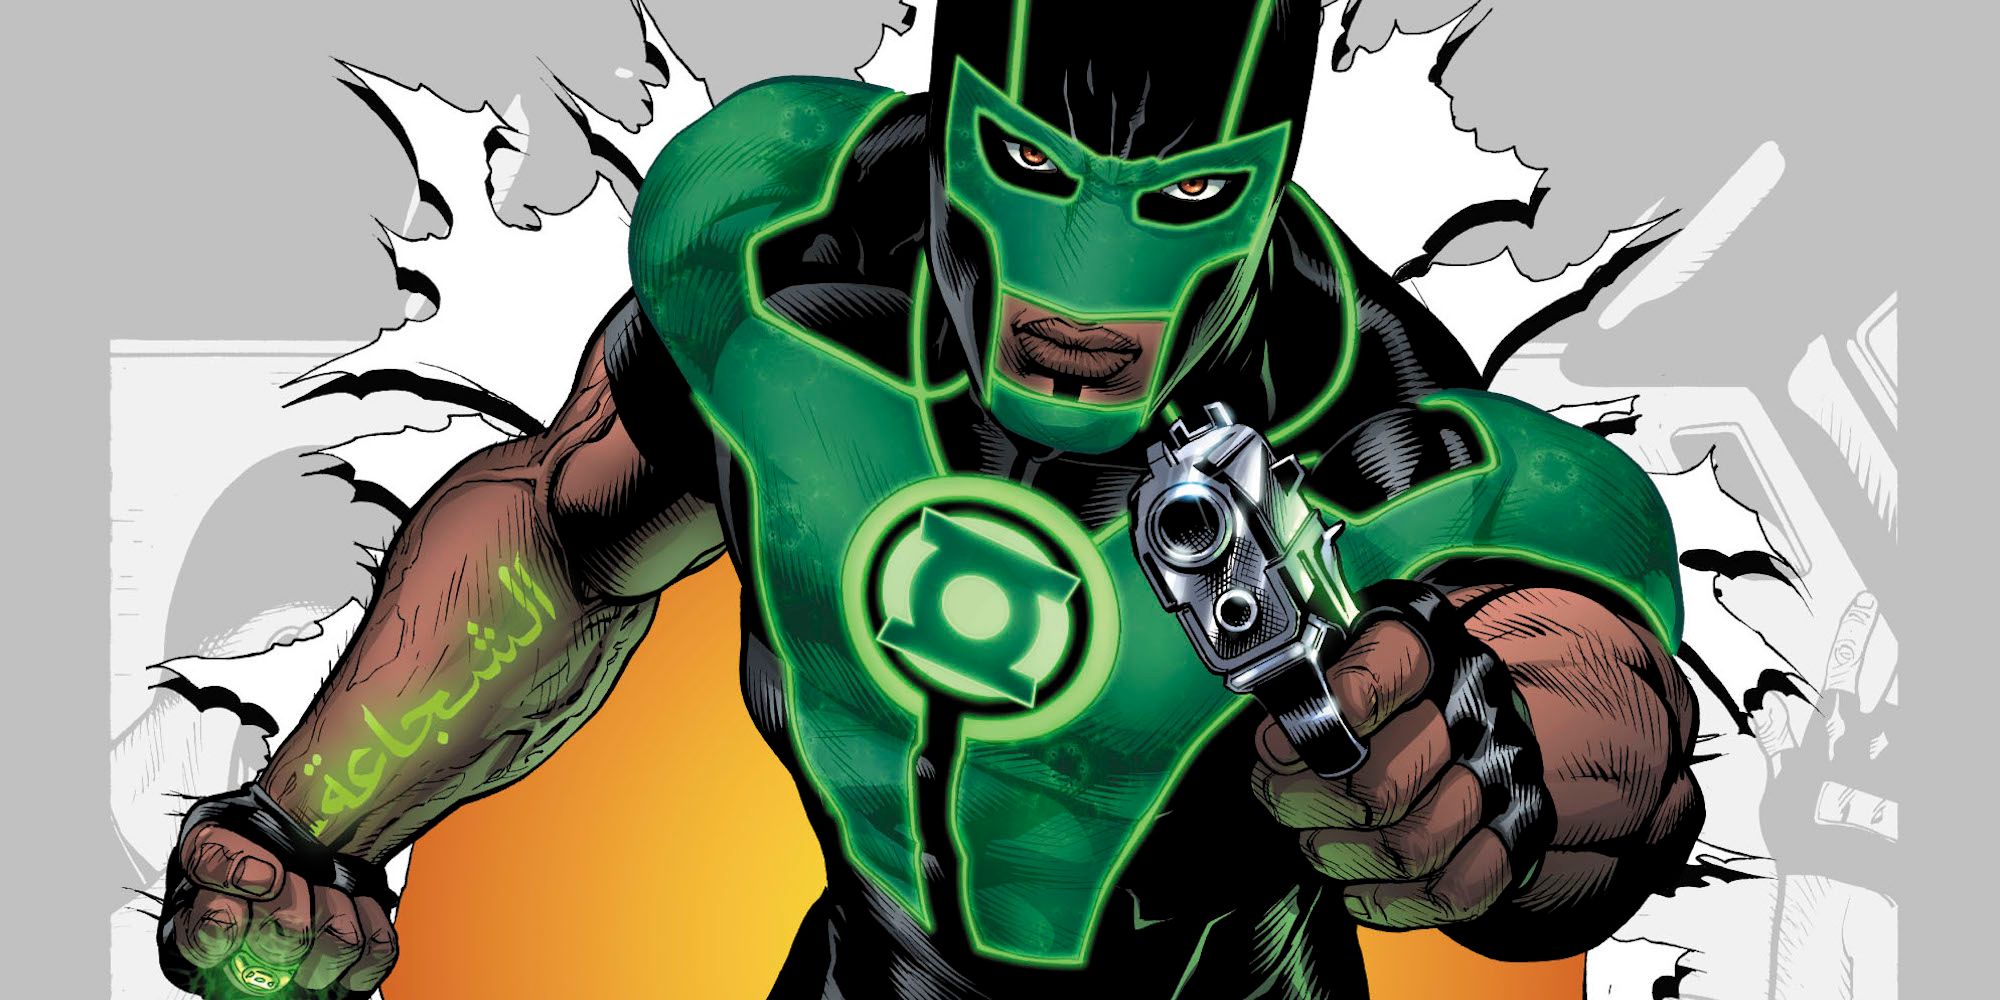 Green Lantern Simon Baz with a gun